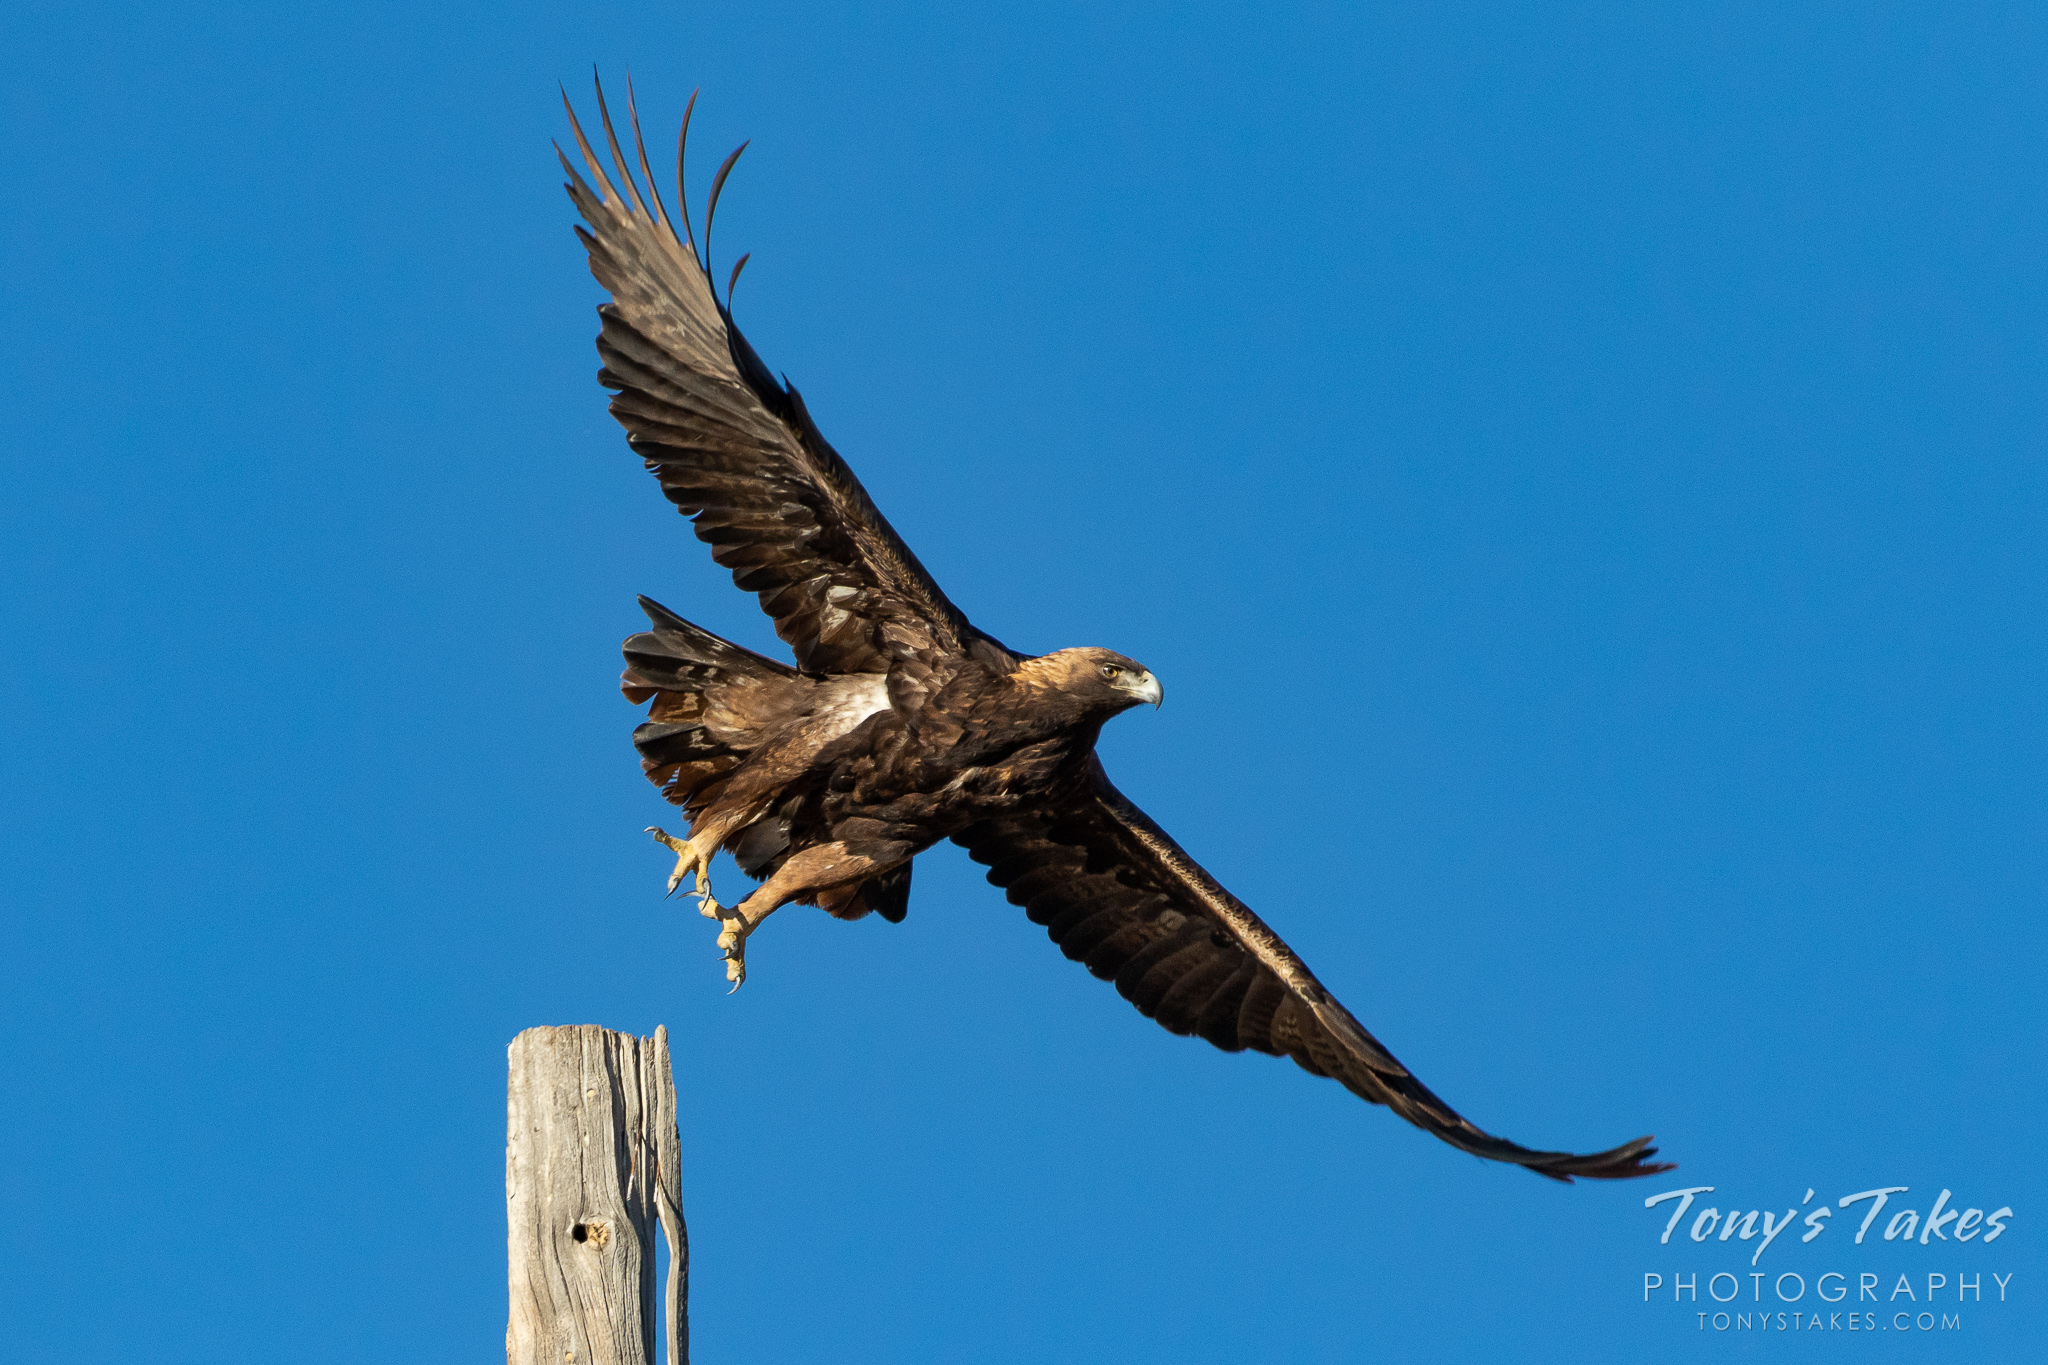 A golden eagle takes flight in Boulder County, Colorado. (© Tony’s Takes)